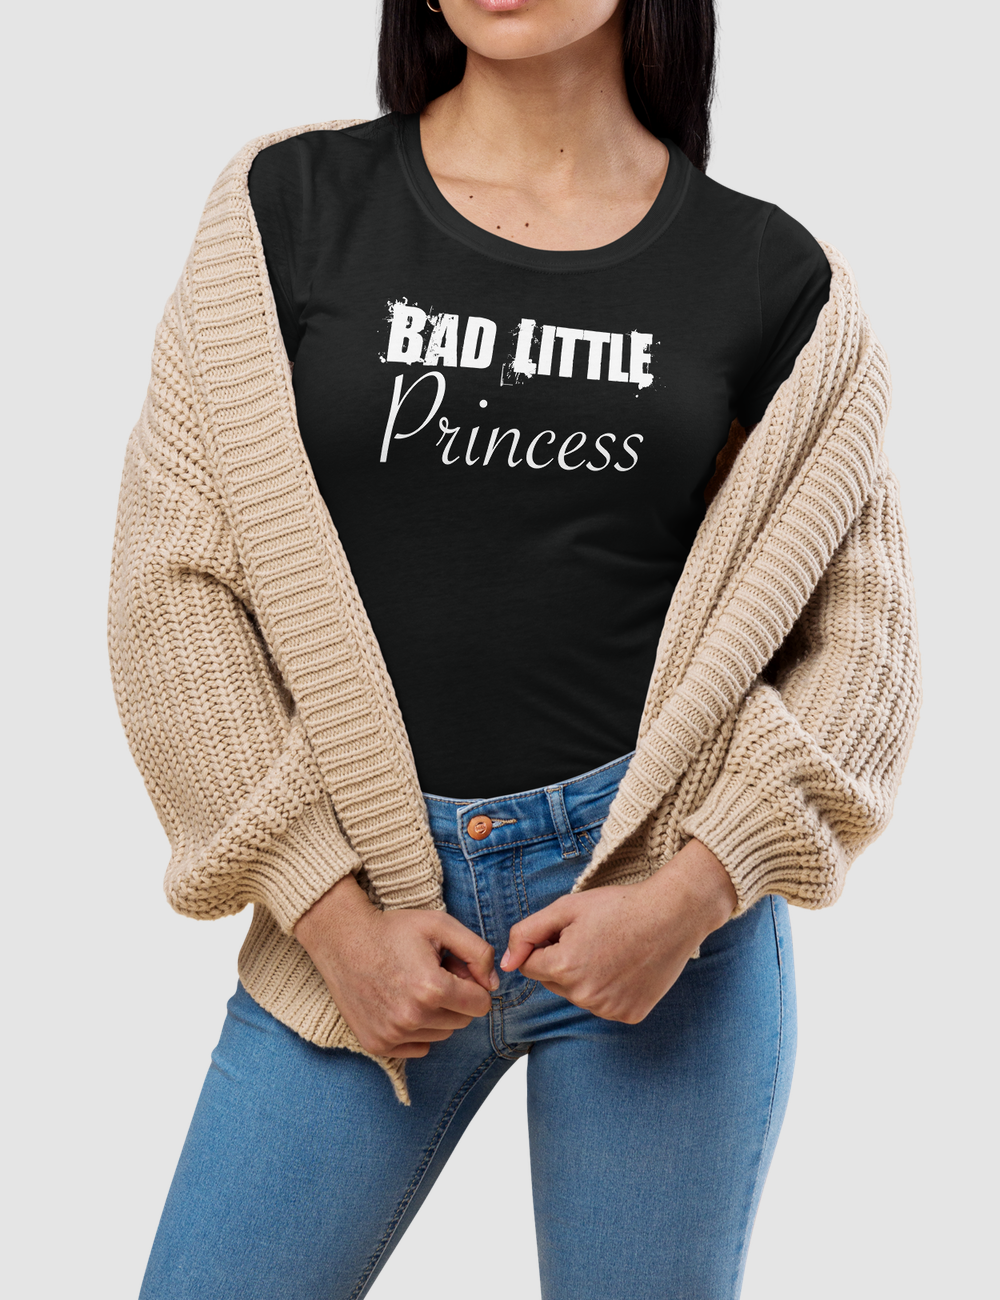 Bad Little Princess | Women's Fitted T-Shirt OniTakai